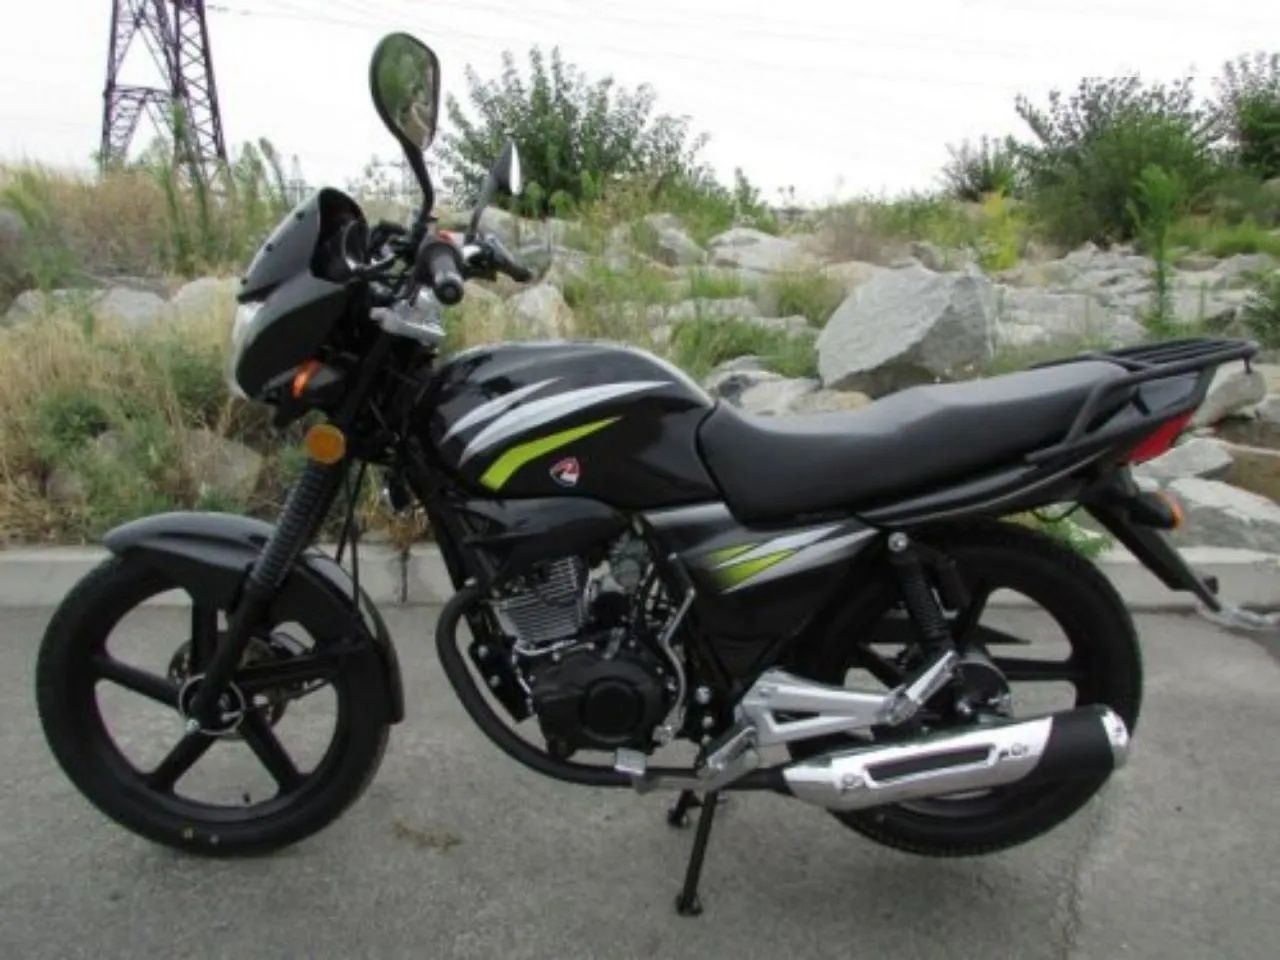 Мотоцикл Спарк200